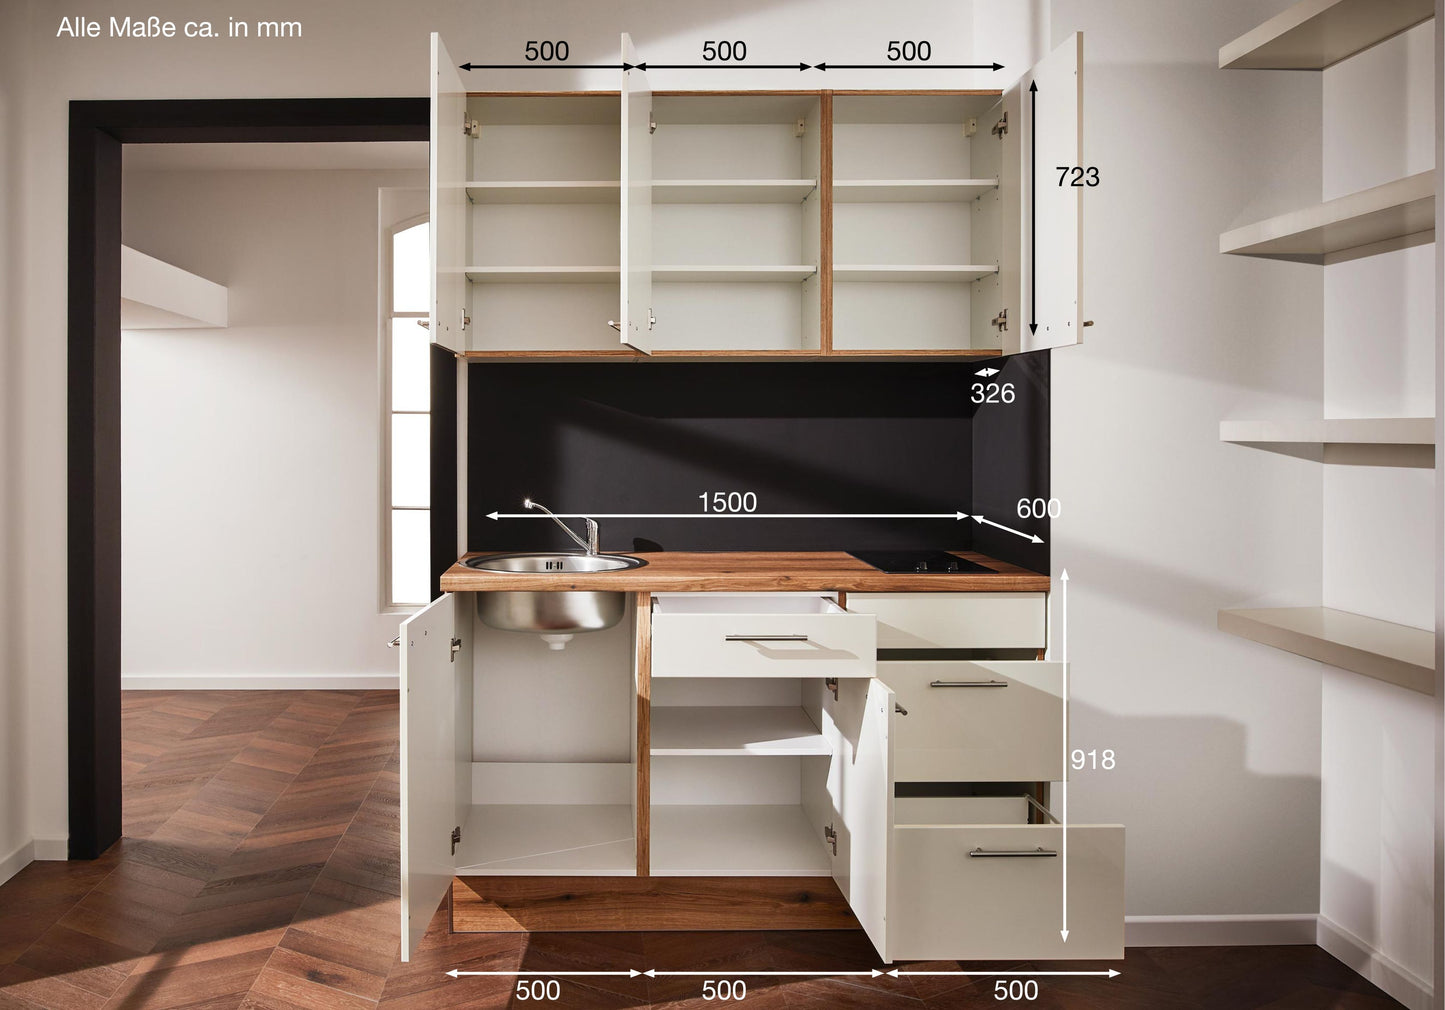 PKW 315017 kitchen unit 150 cm, cupboards in high-gloss magnolia white